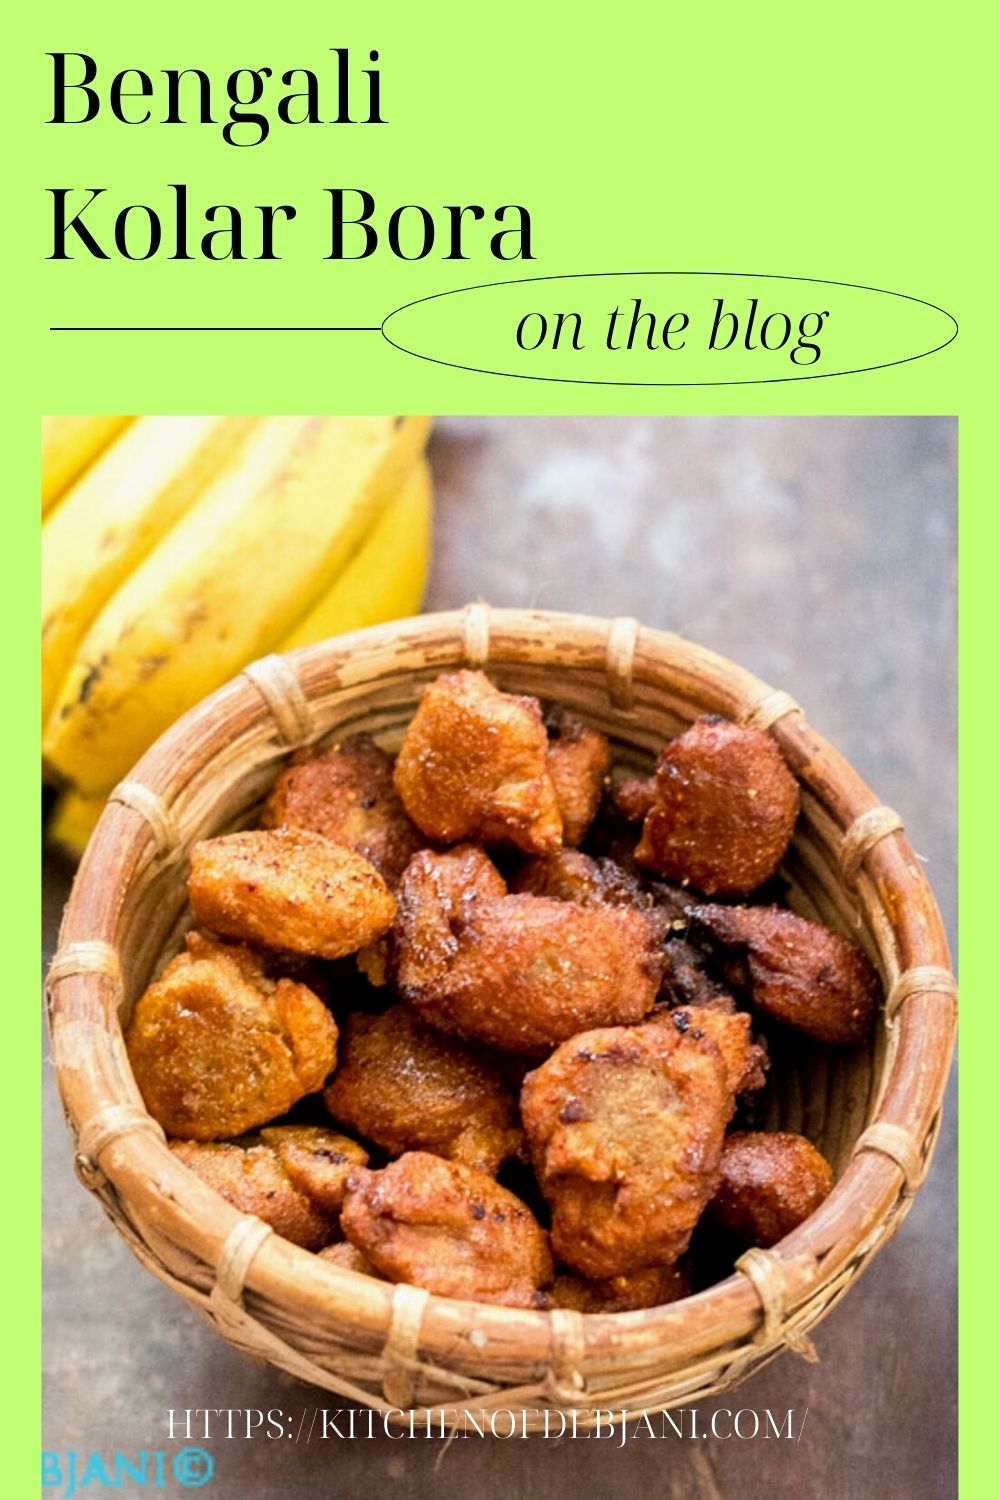 %Bengali Kolar Bora Recipe Food Pinterest Pin